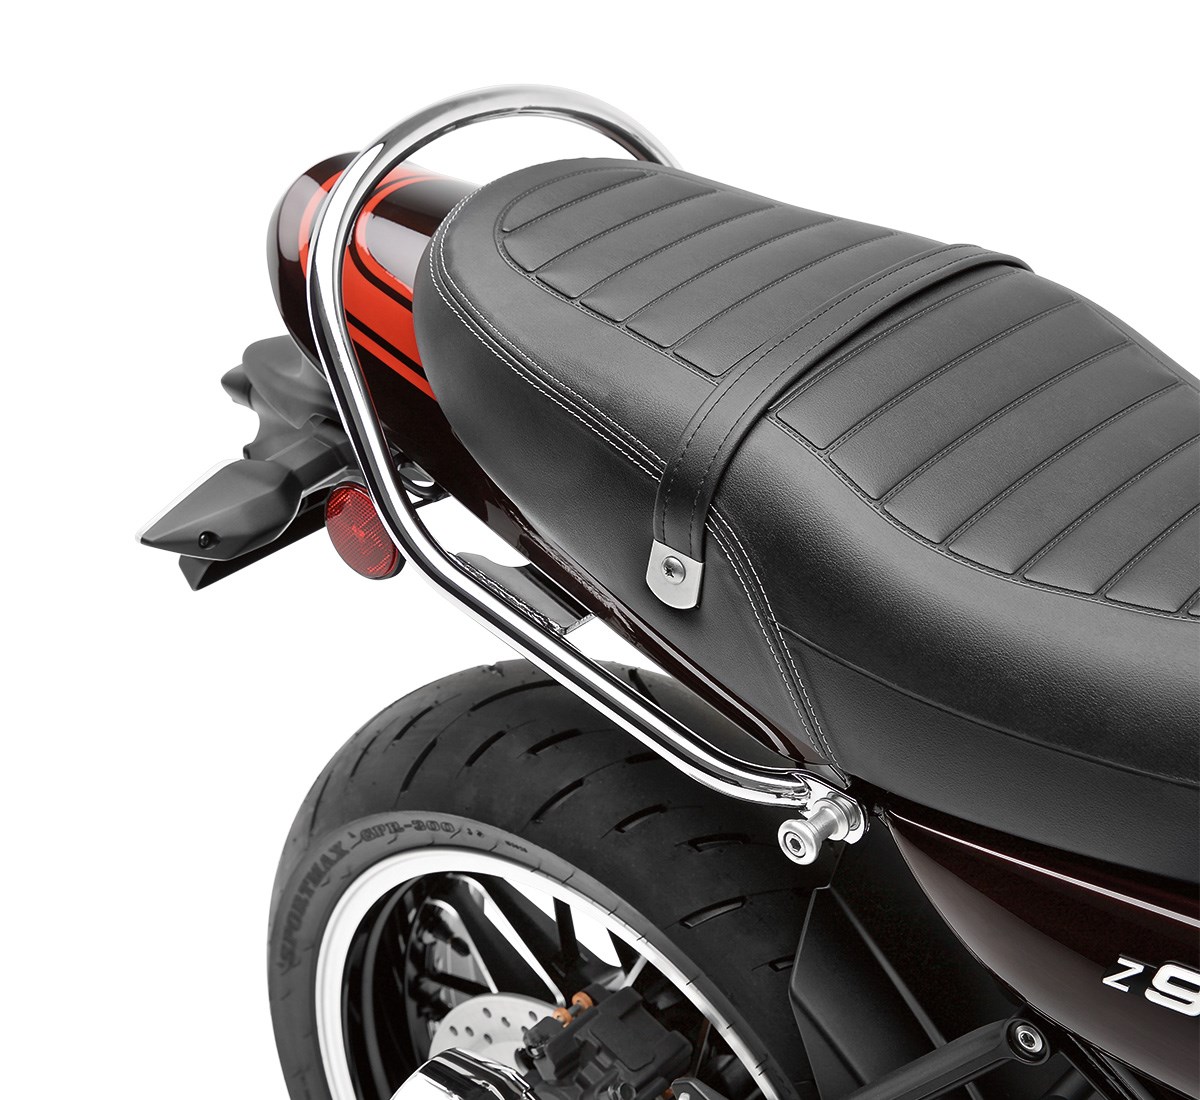 CNC Aluminum Alloy Rear Seat Rail Kit with Mounting Hardware Black Motorcycle Passenger Rear Grab Bars for Kawasaki Z650 17-18 